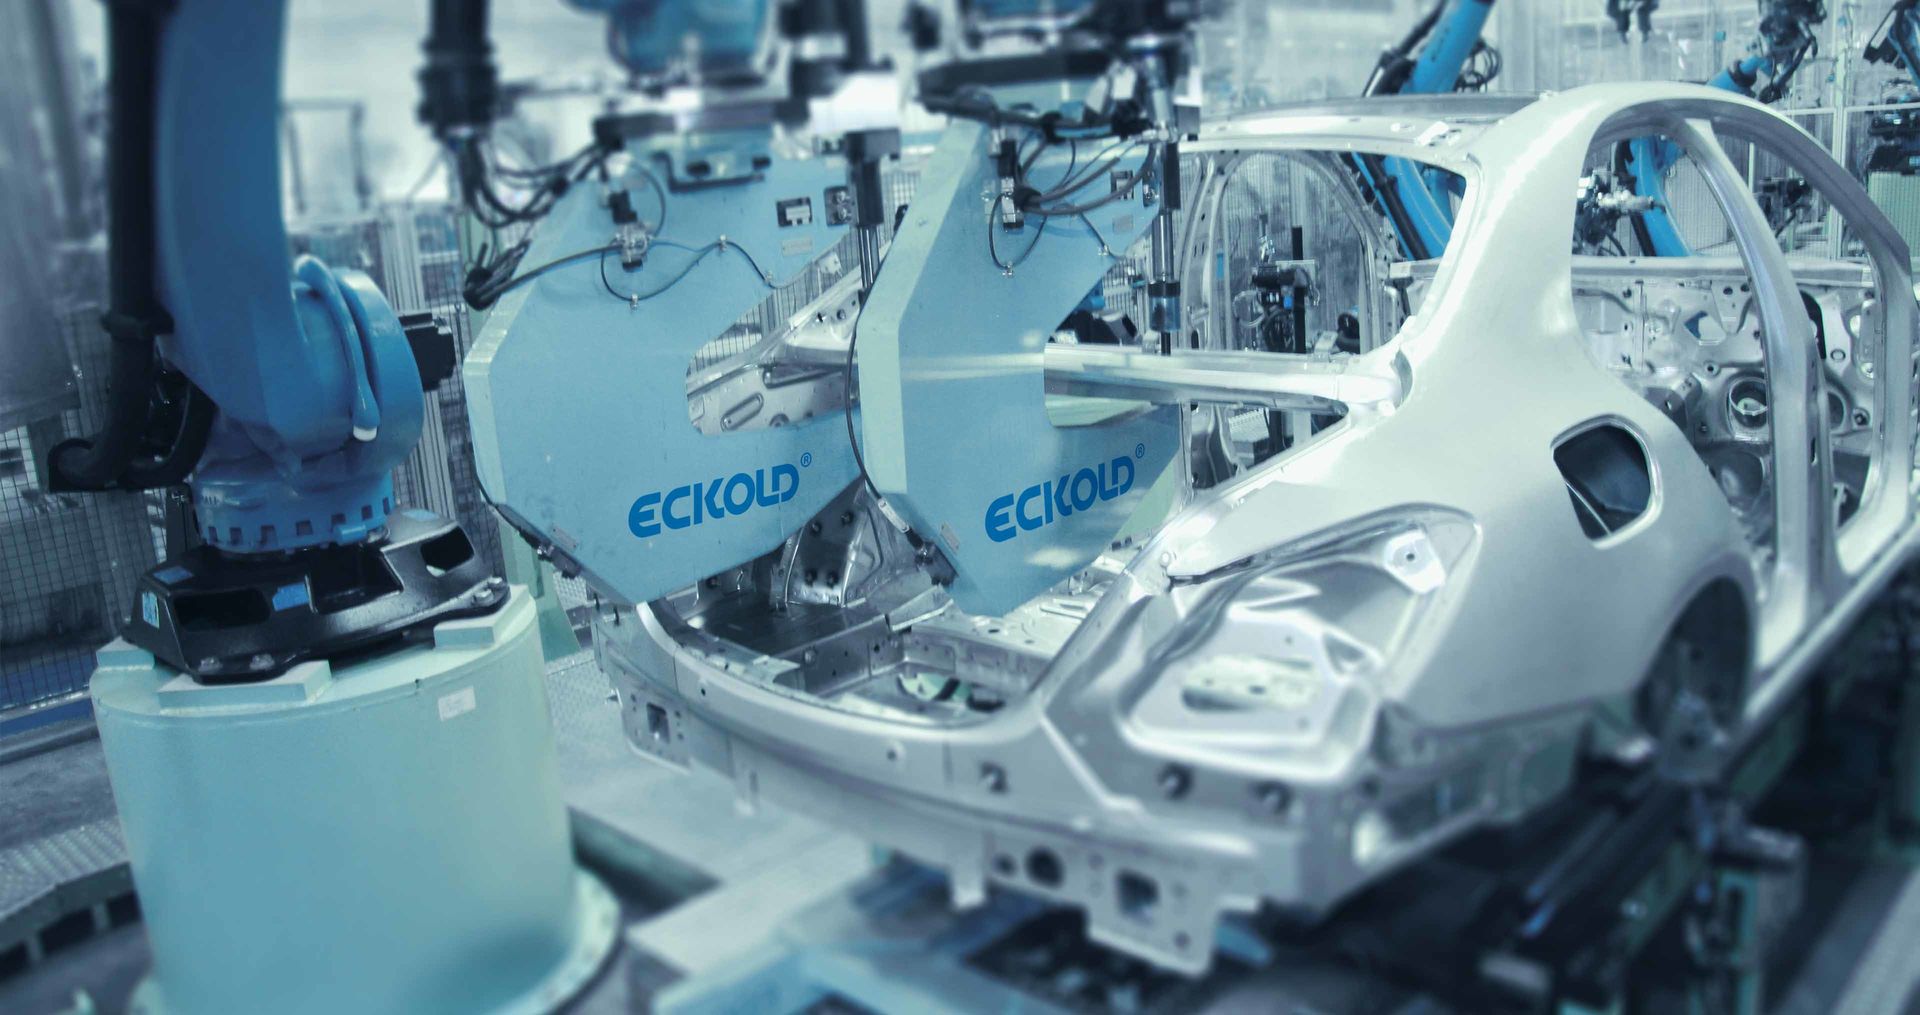 ECKOLD 机器用于：汽车制造工业